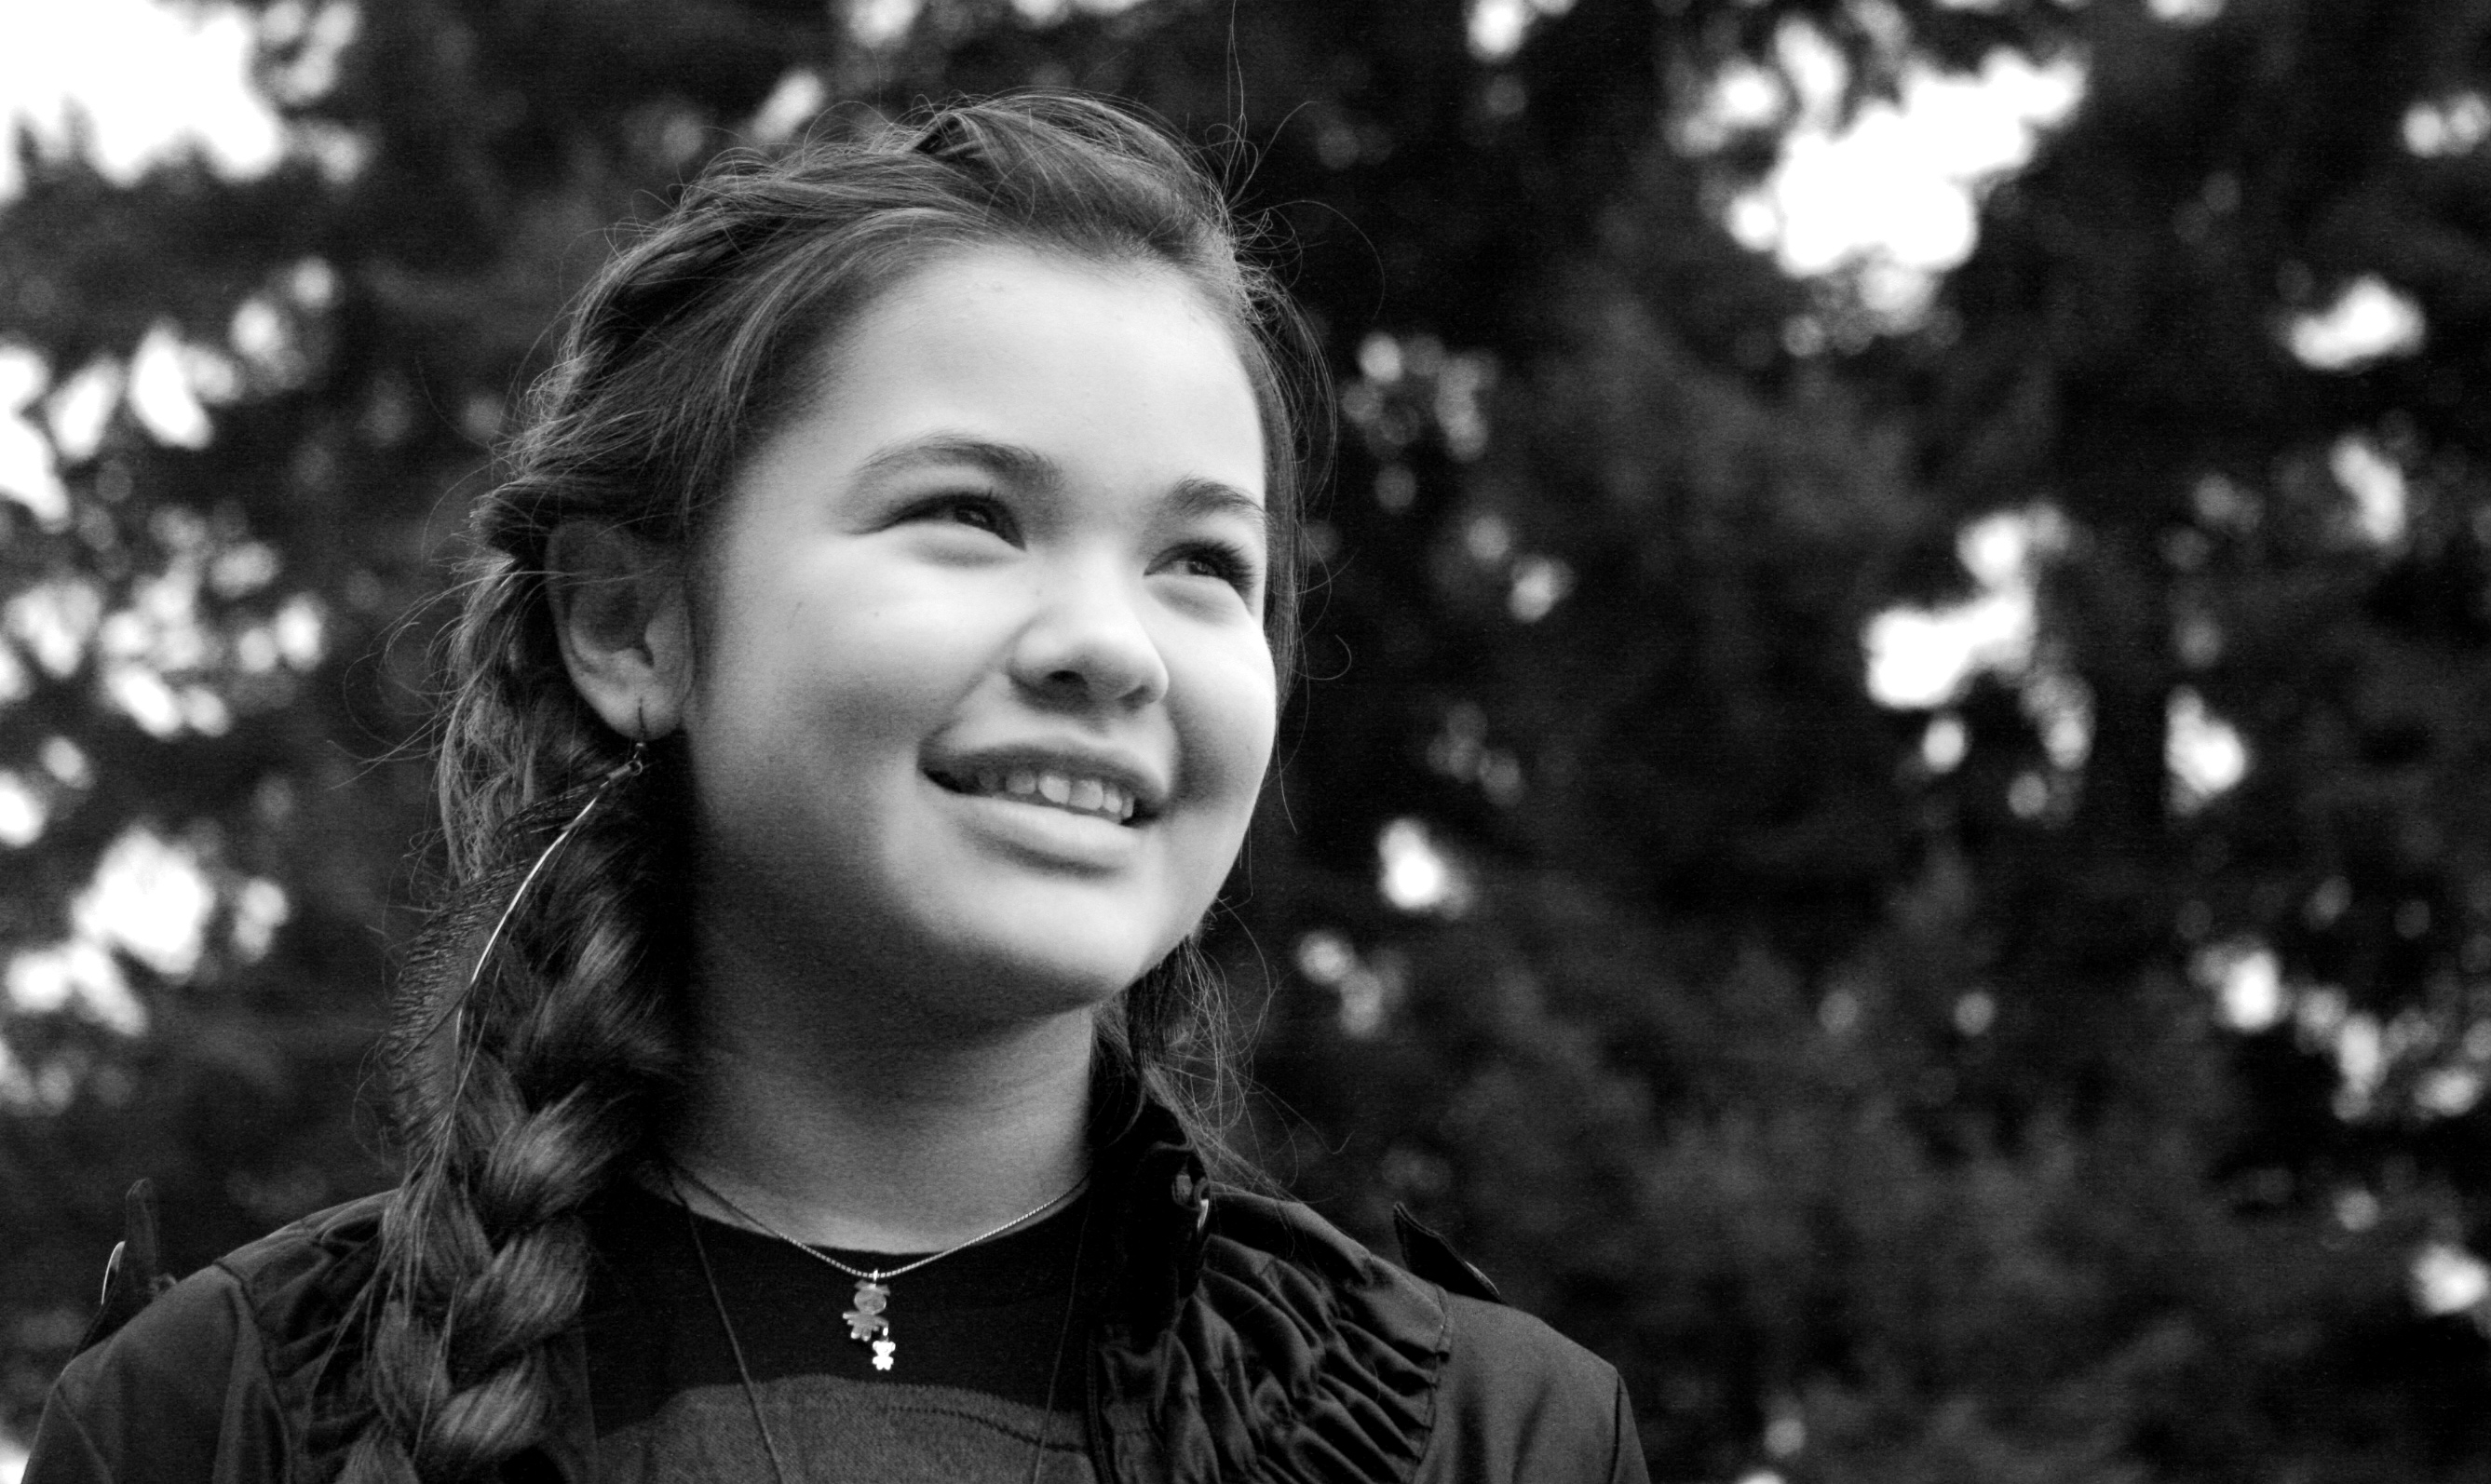 Tla’min First Nation teen activist combines music, acting, cultural ambassadorship in environmental work